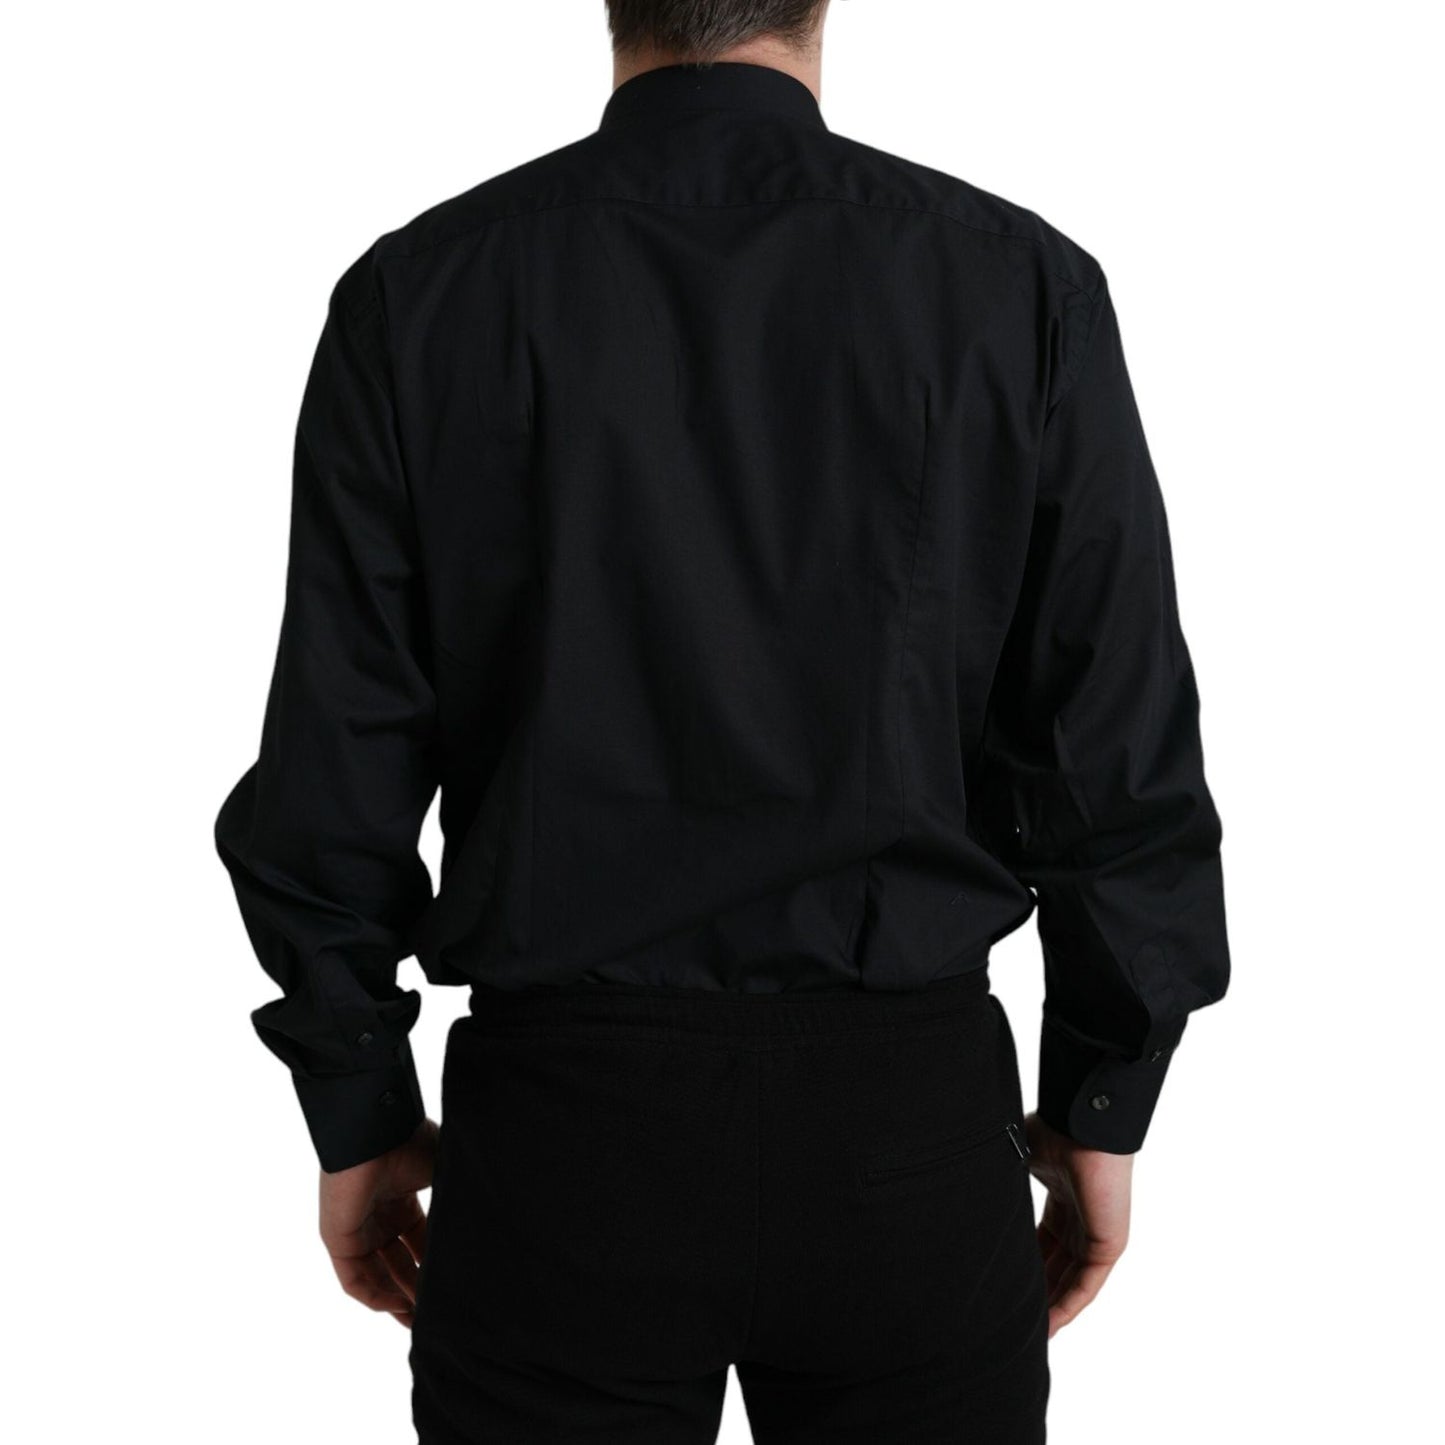 Dolce & Gabbana Exquisite Slim Fit Italian Dress Shirt black-cotton-collared-formal-dress-shirt